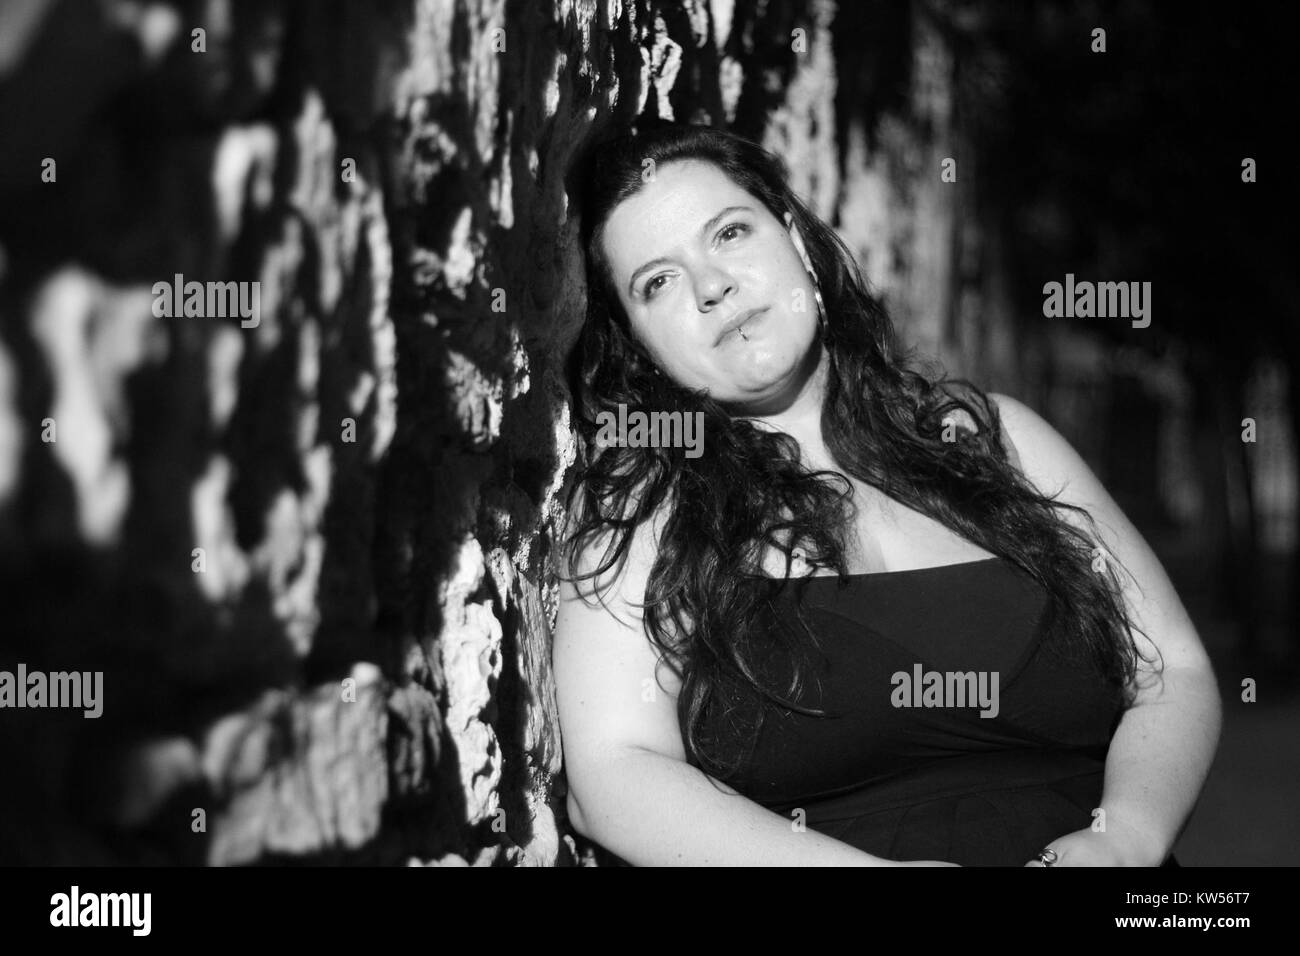 Black and white portrait photography Stock Photo - Alamy